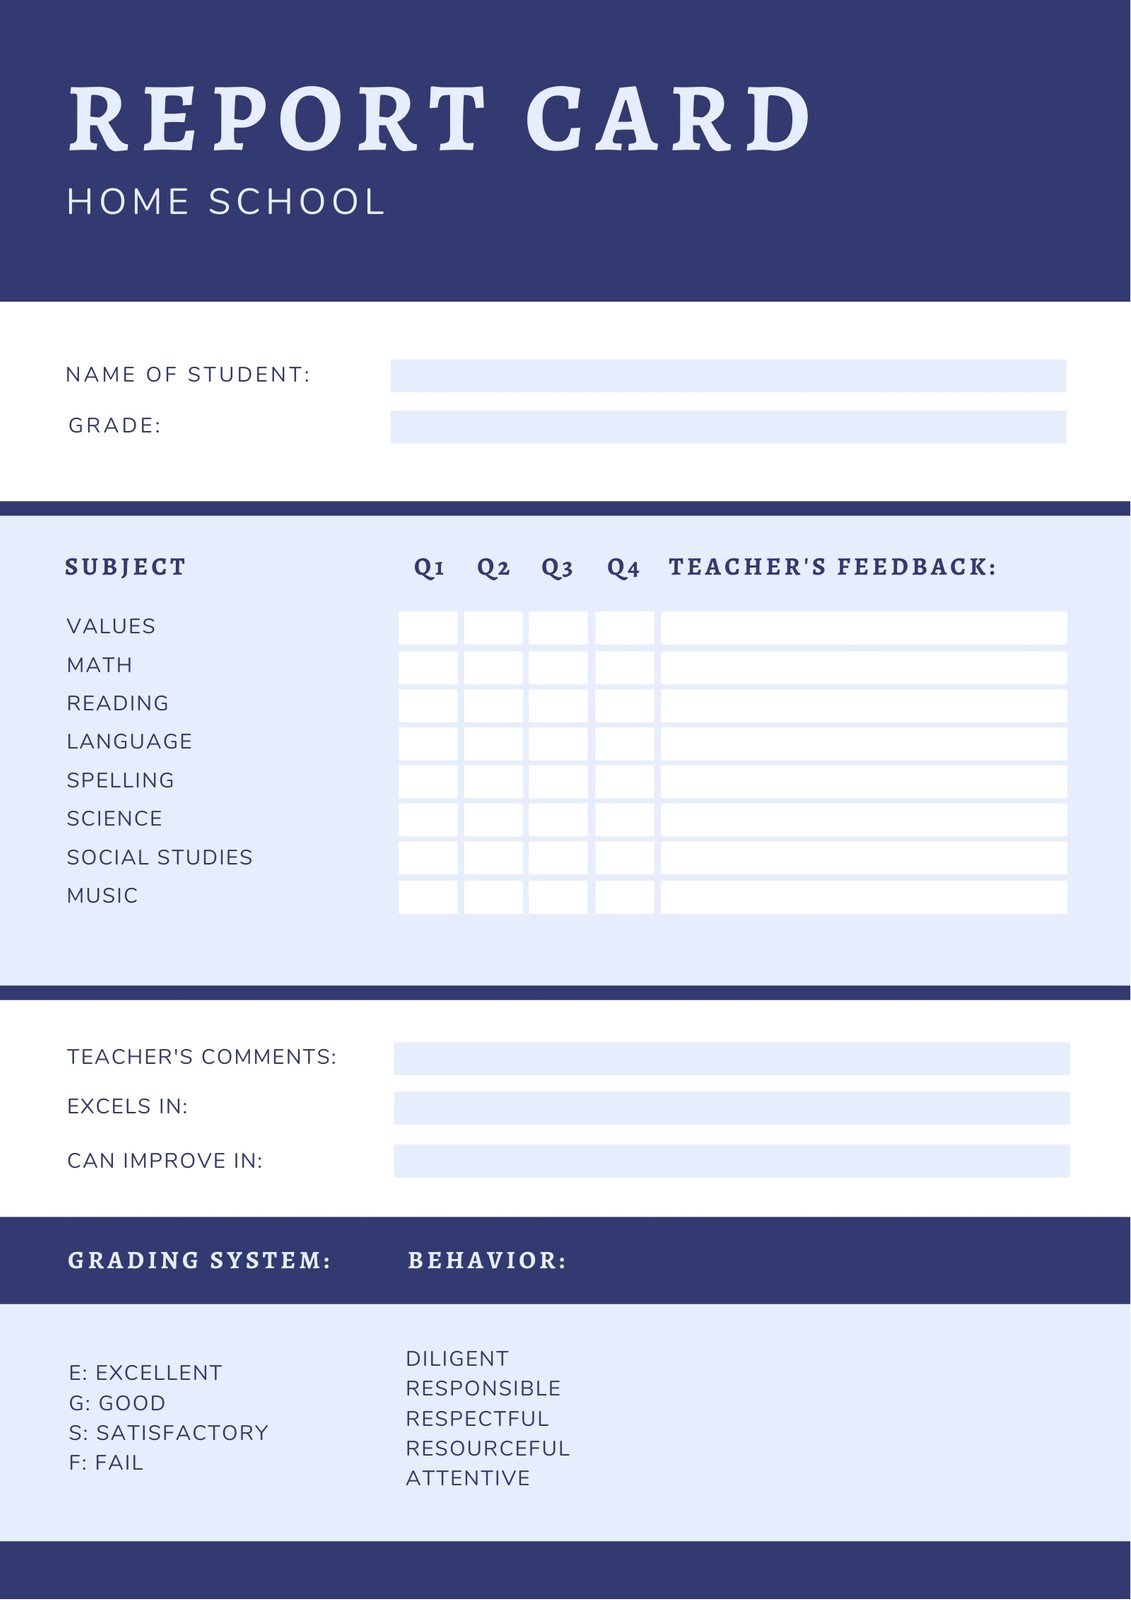 Customize 32 Homeschool Report Cards Templates Online Canva